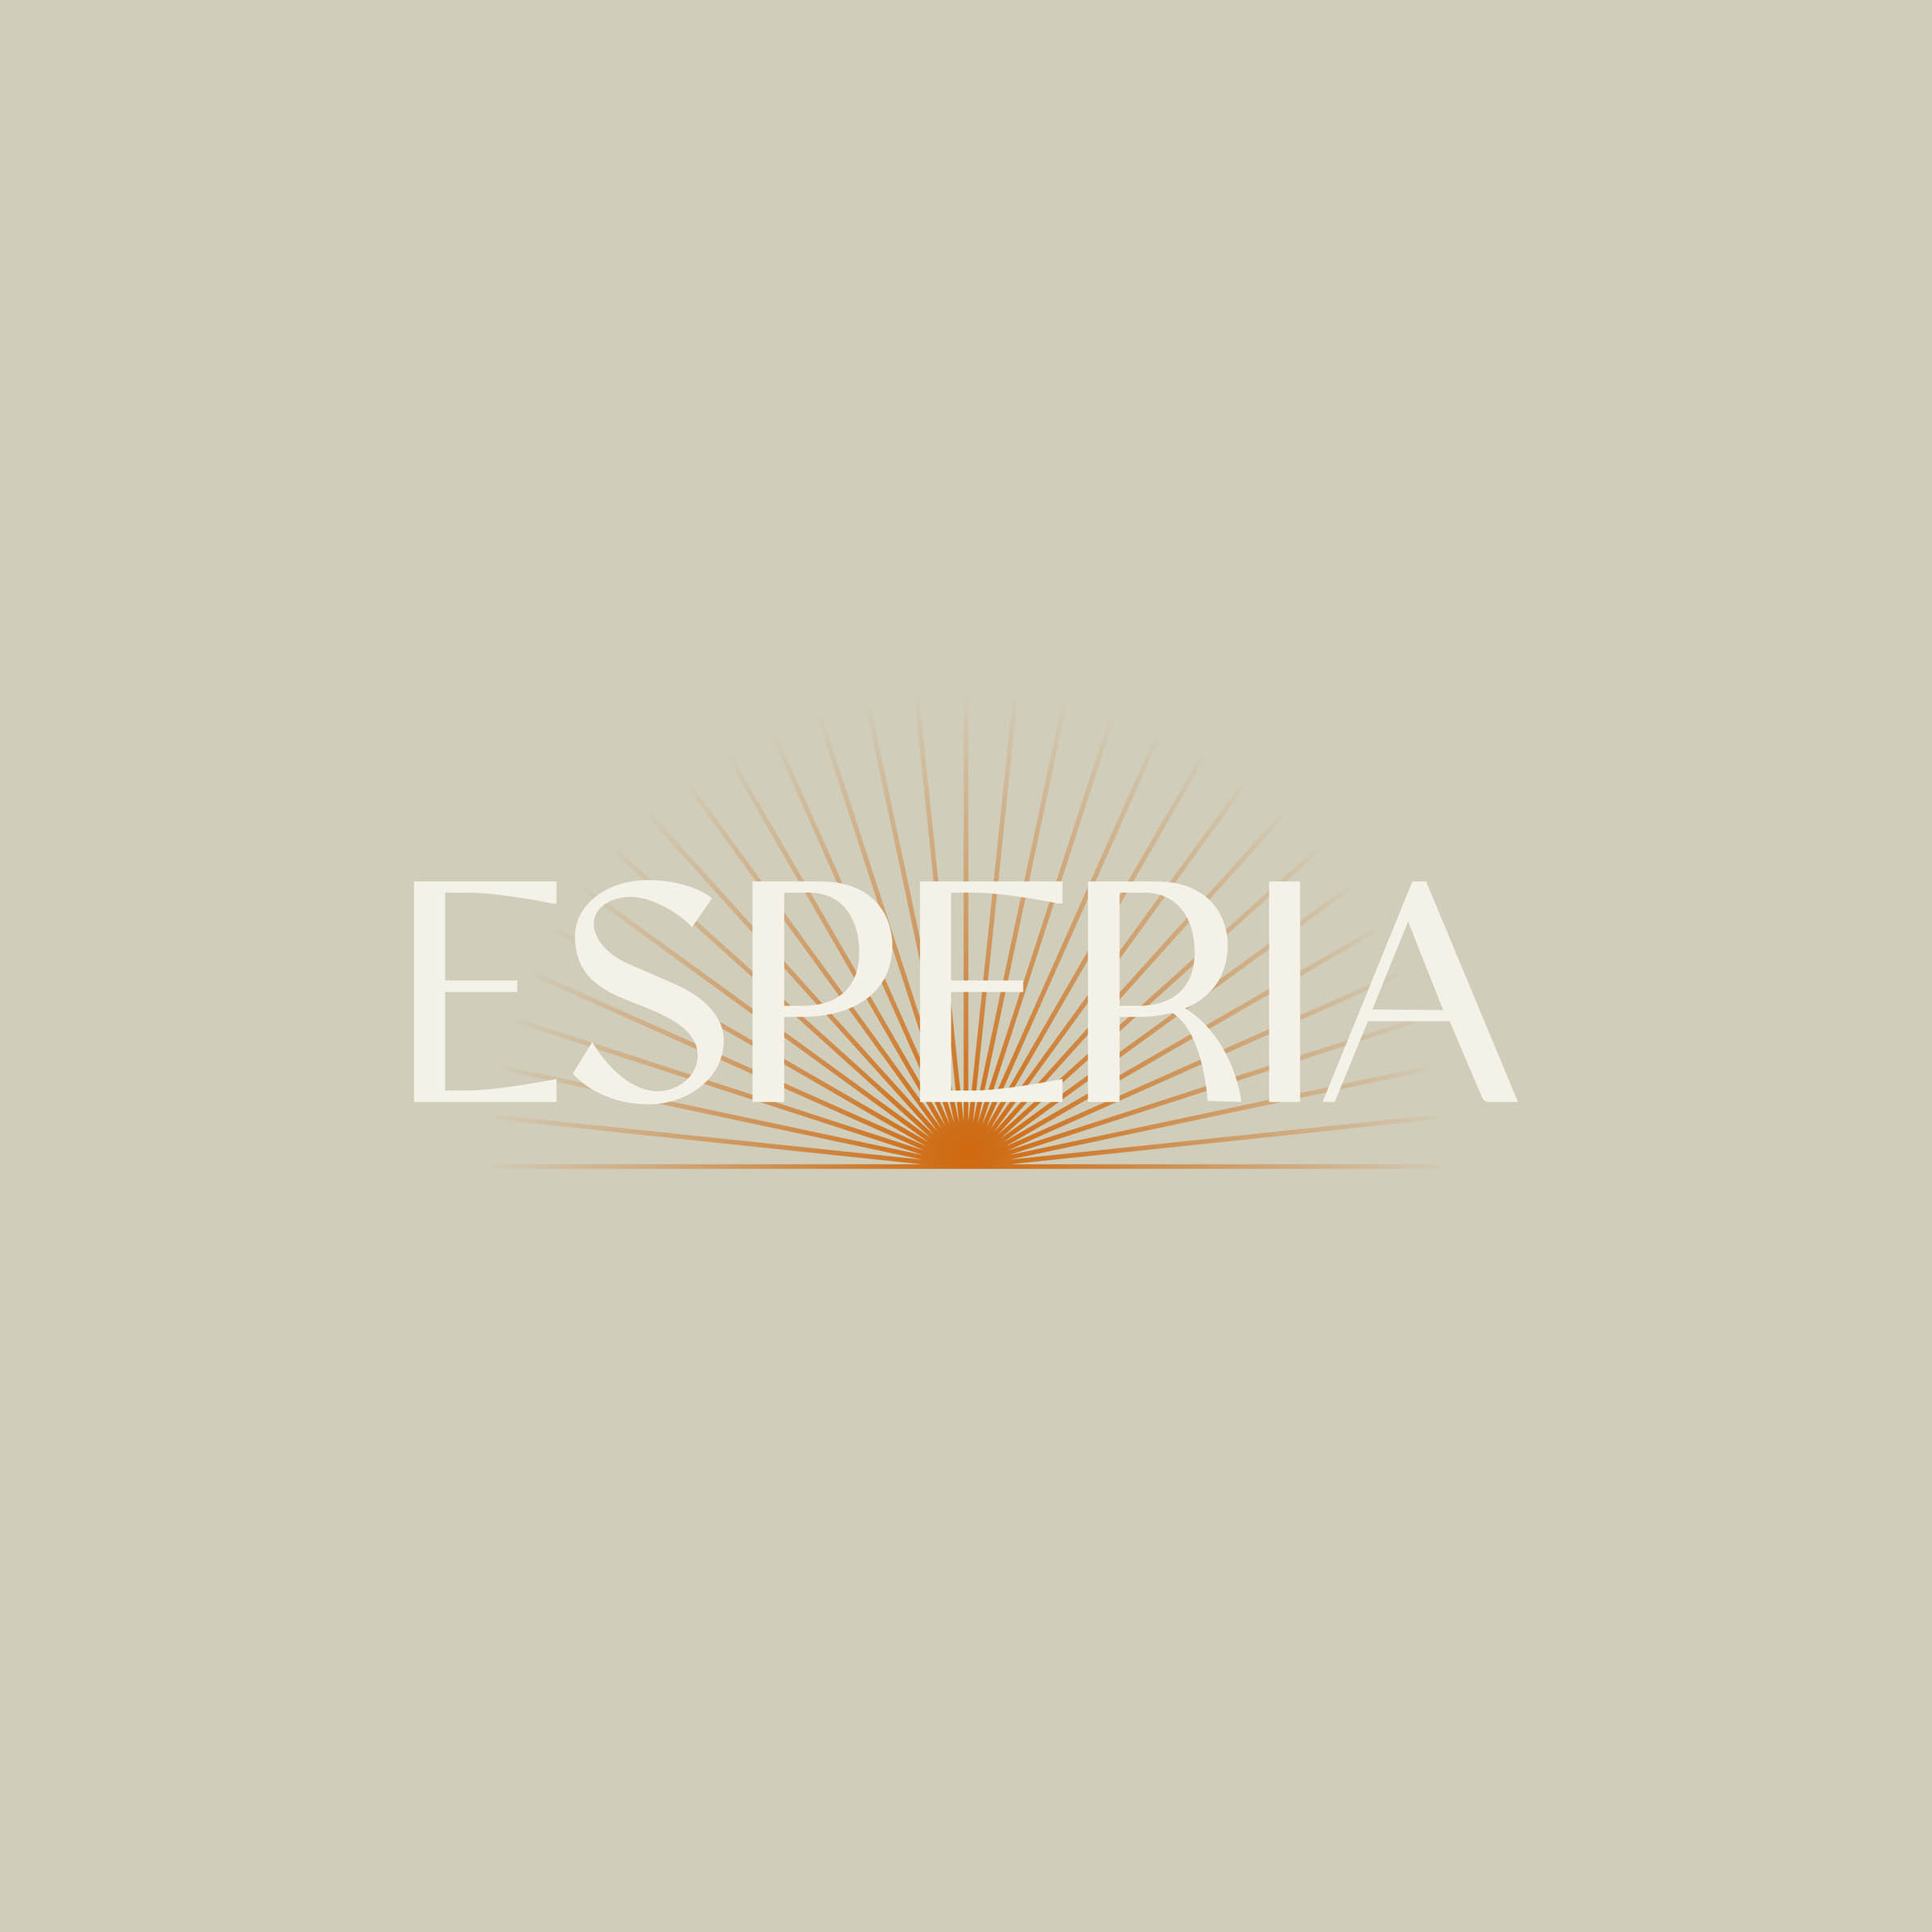 Esperia Village Branding